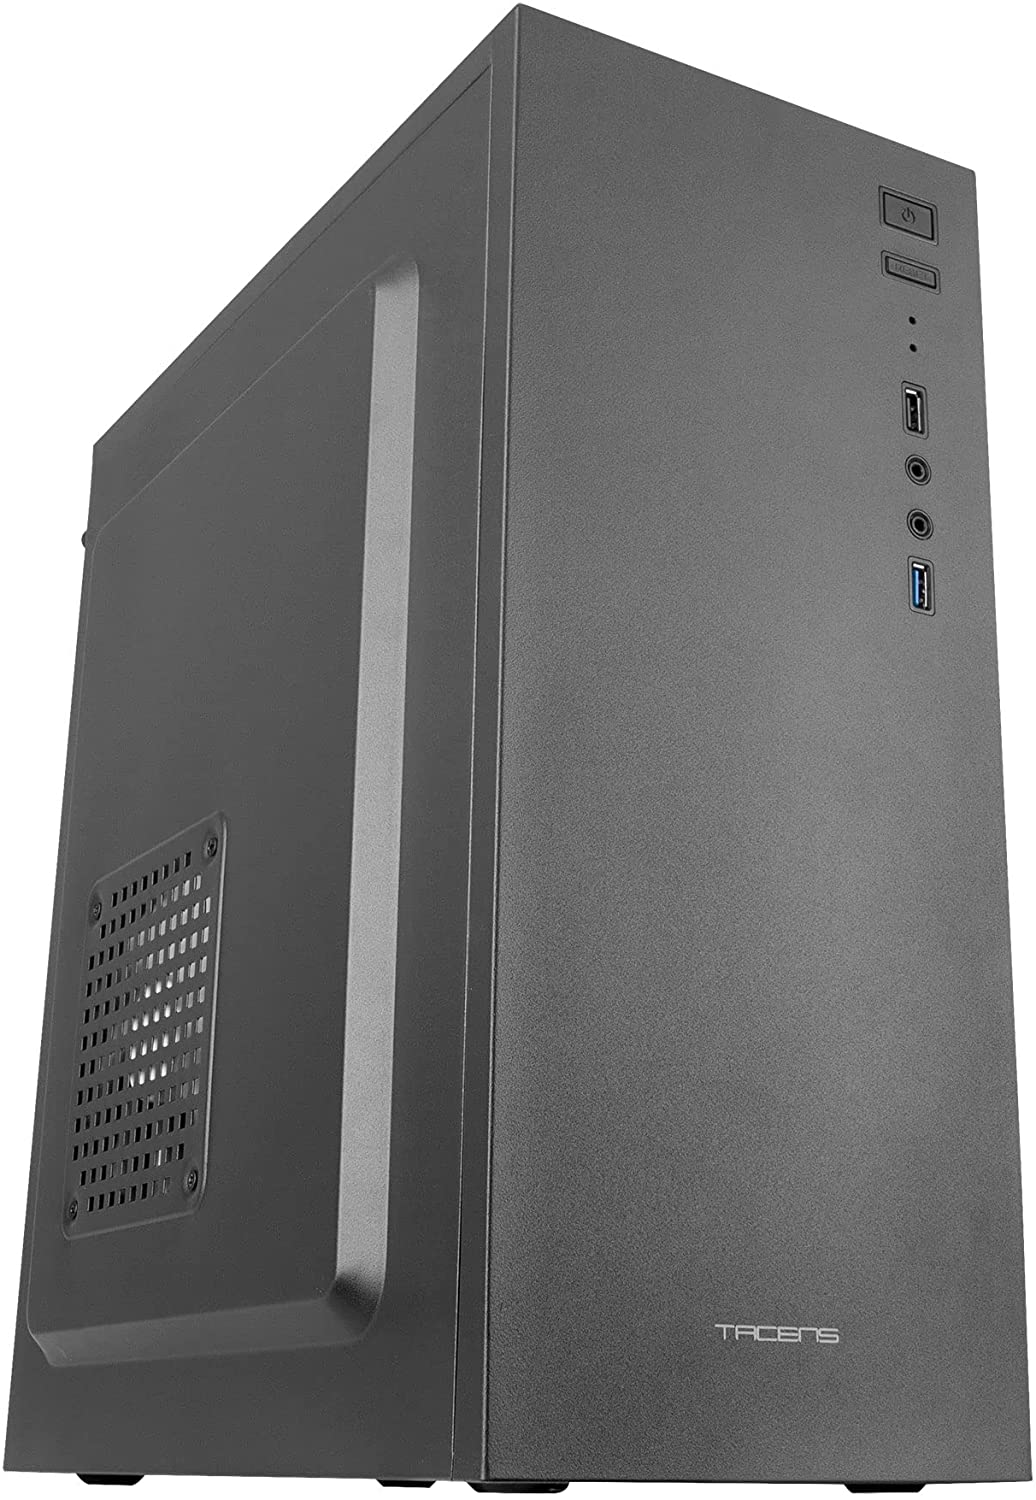 Tacens Alux ATX, Micro ATX, Mini-ITX Mid-Tower Case - 2.5", 3.5" HDD Size - USB-A 3.1, USB-A 2.0 et Audio - 1 Ventilateur 120mm Inclus